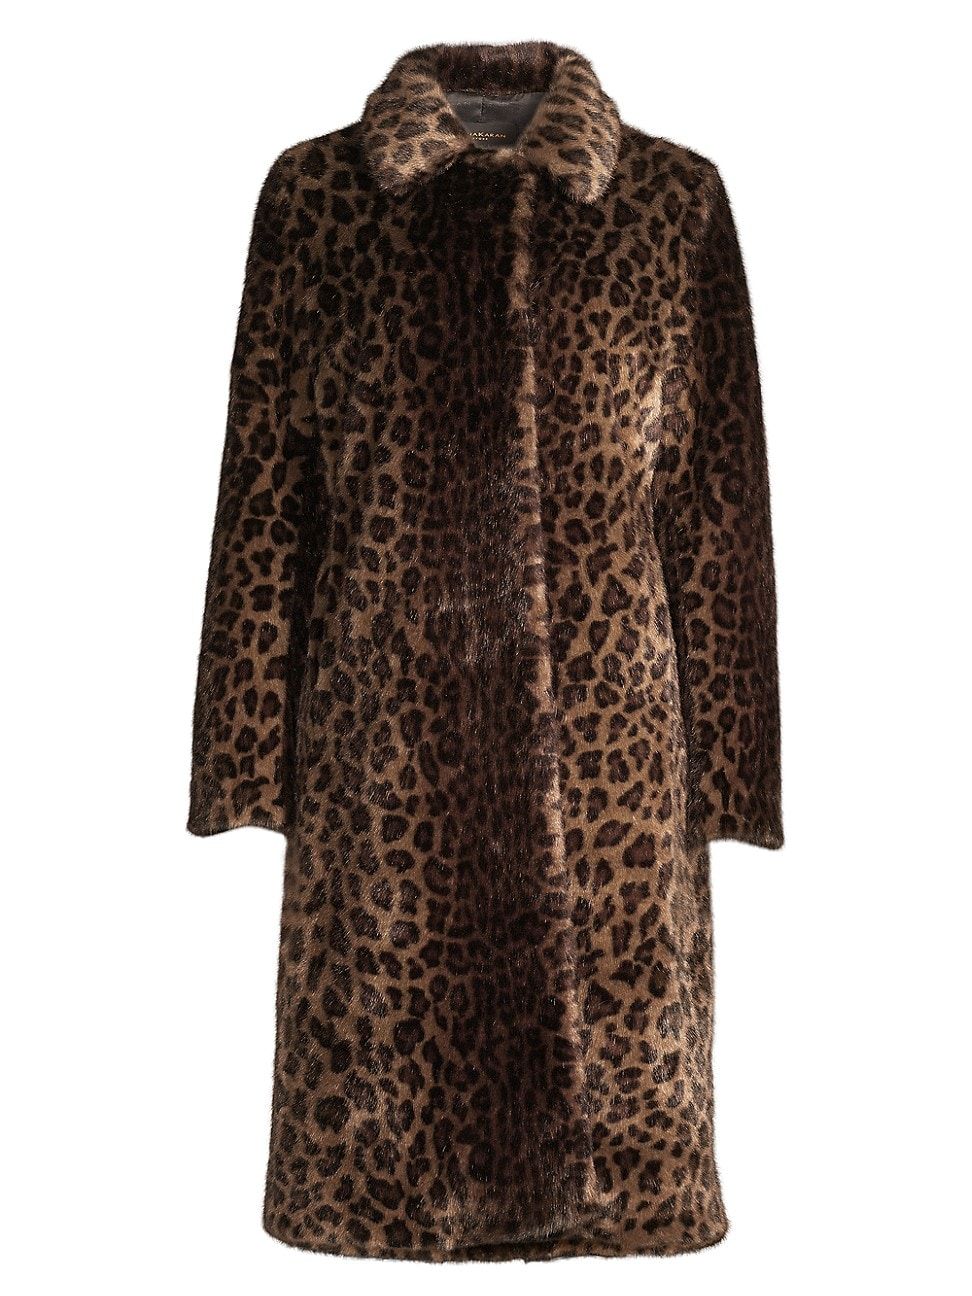 The 20 Best Faux-Fur Coats for Channeling Carmela Soprano